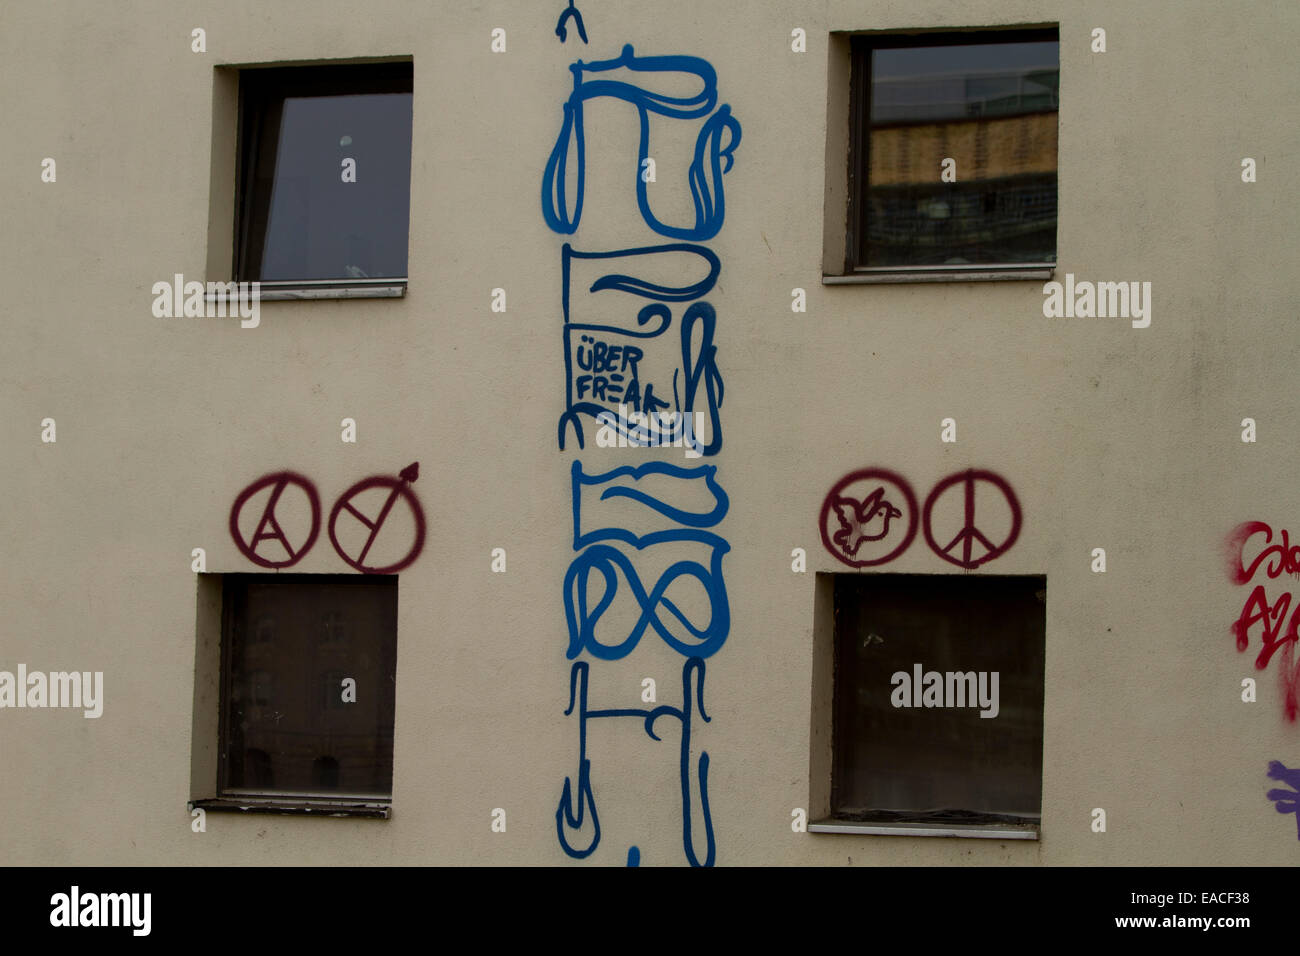 Graffiti street art Berlin wall tags windows mural Stock Photo